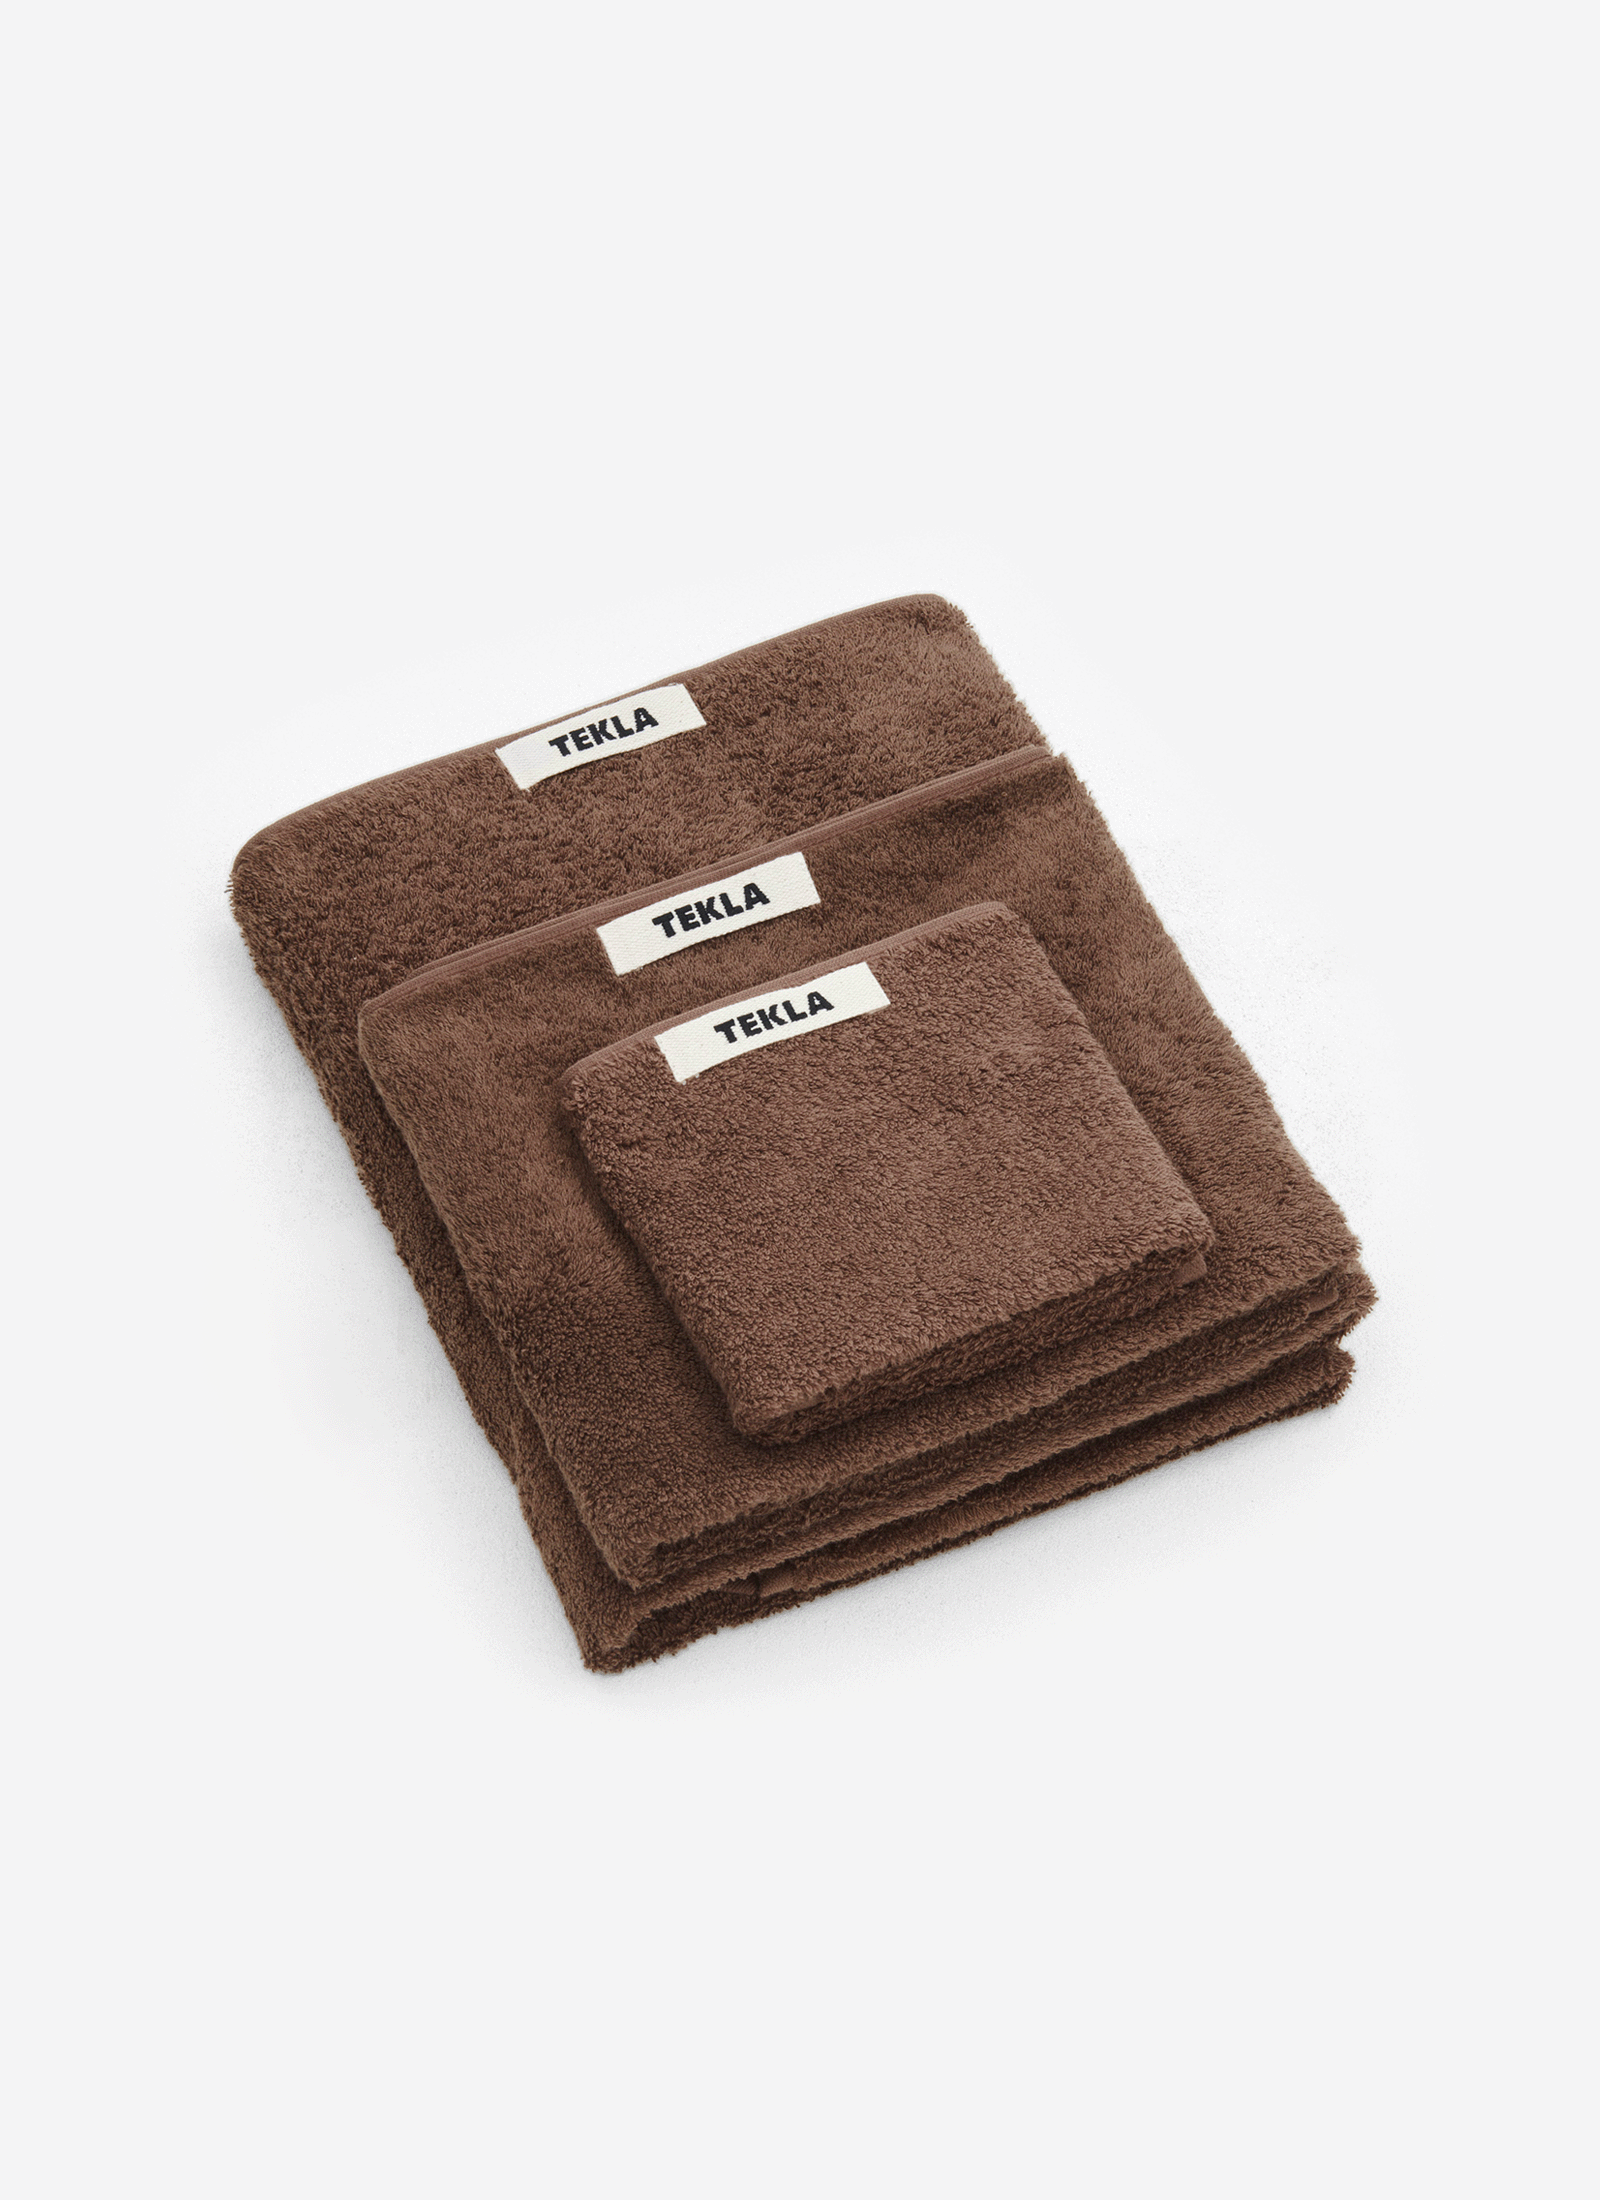 Kodiak Brown Towels - 4pc Set